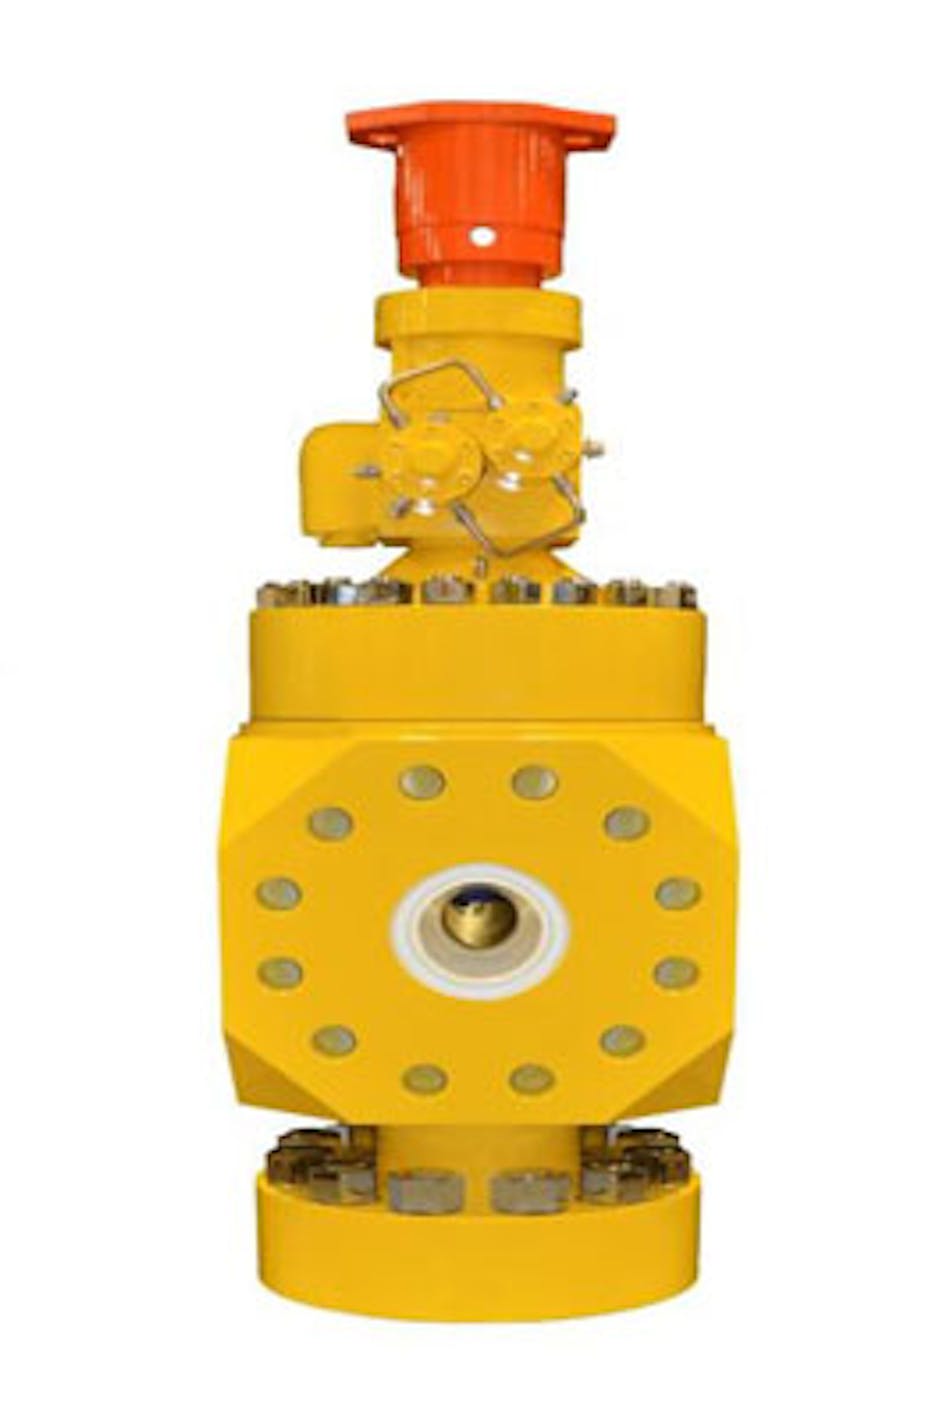 Master Flo P4-20Ksi ultra HP/HT subsea choke valve